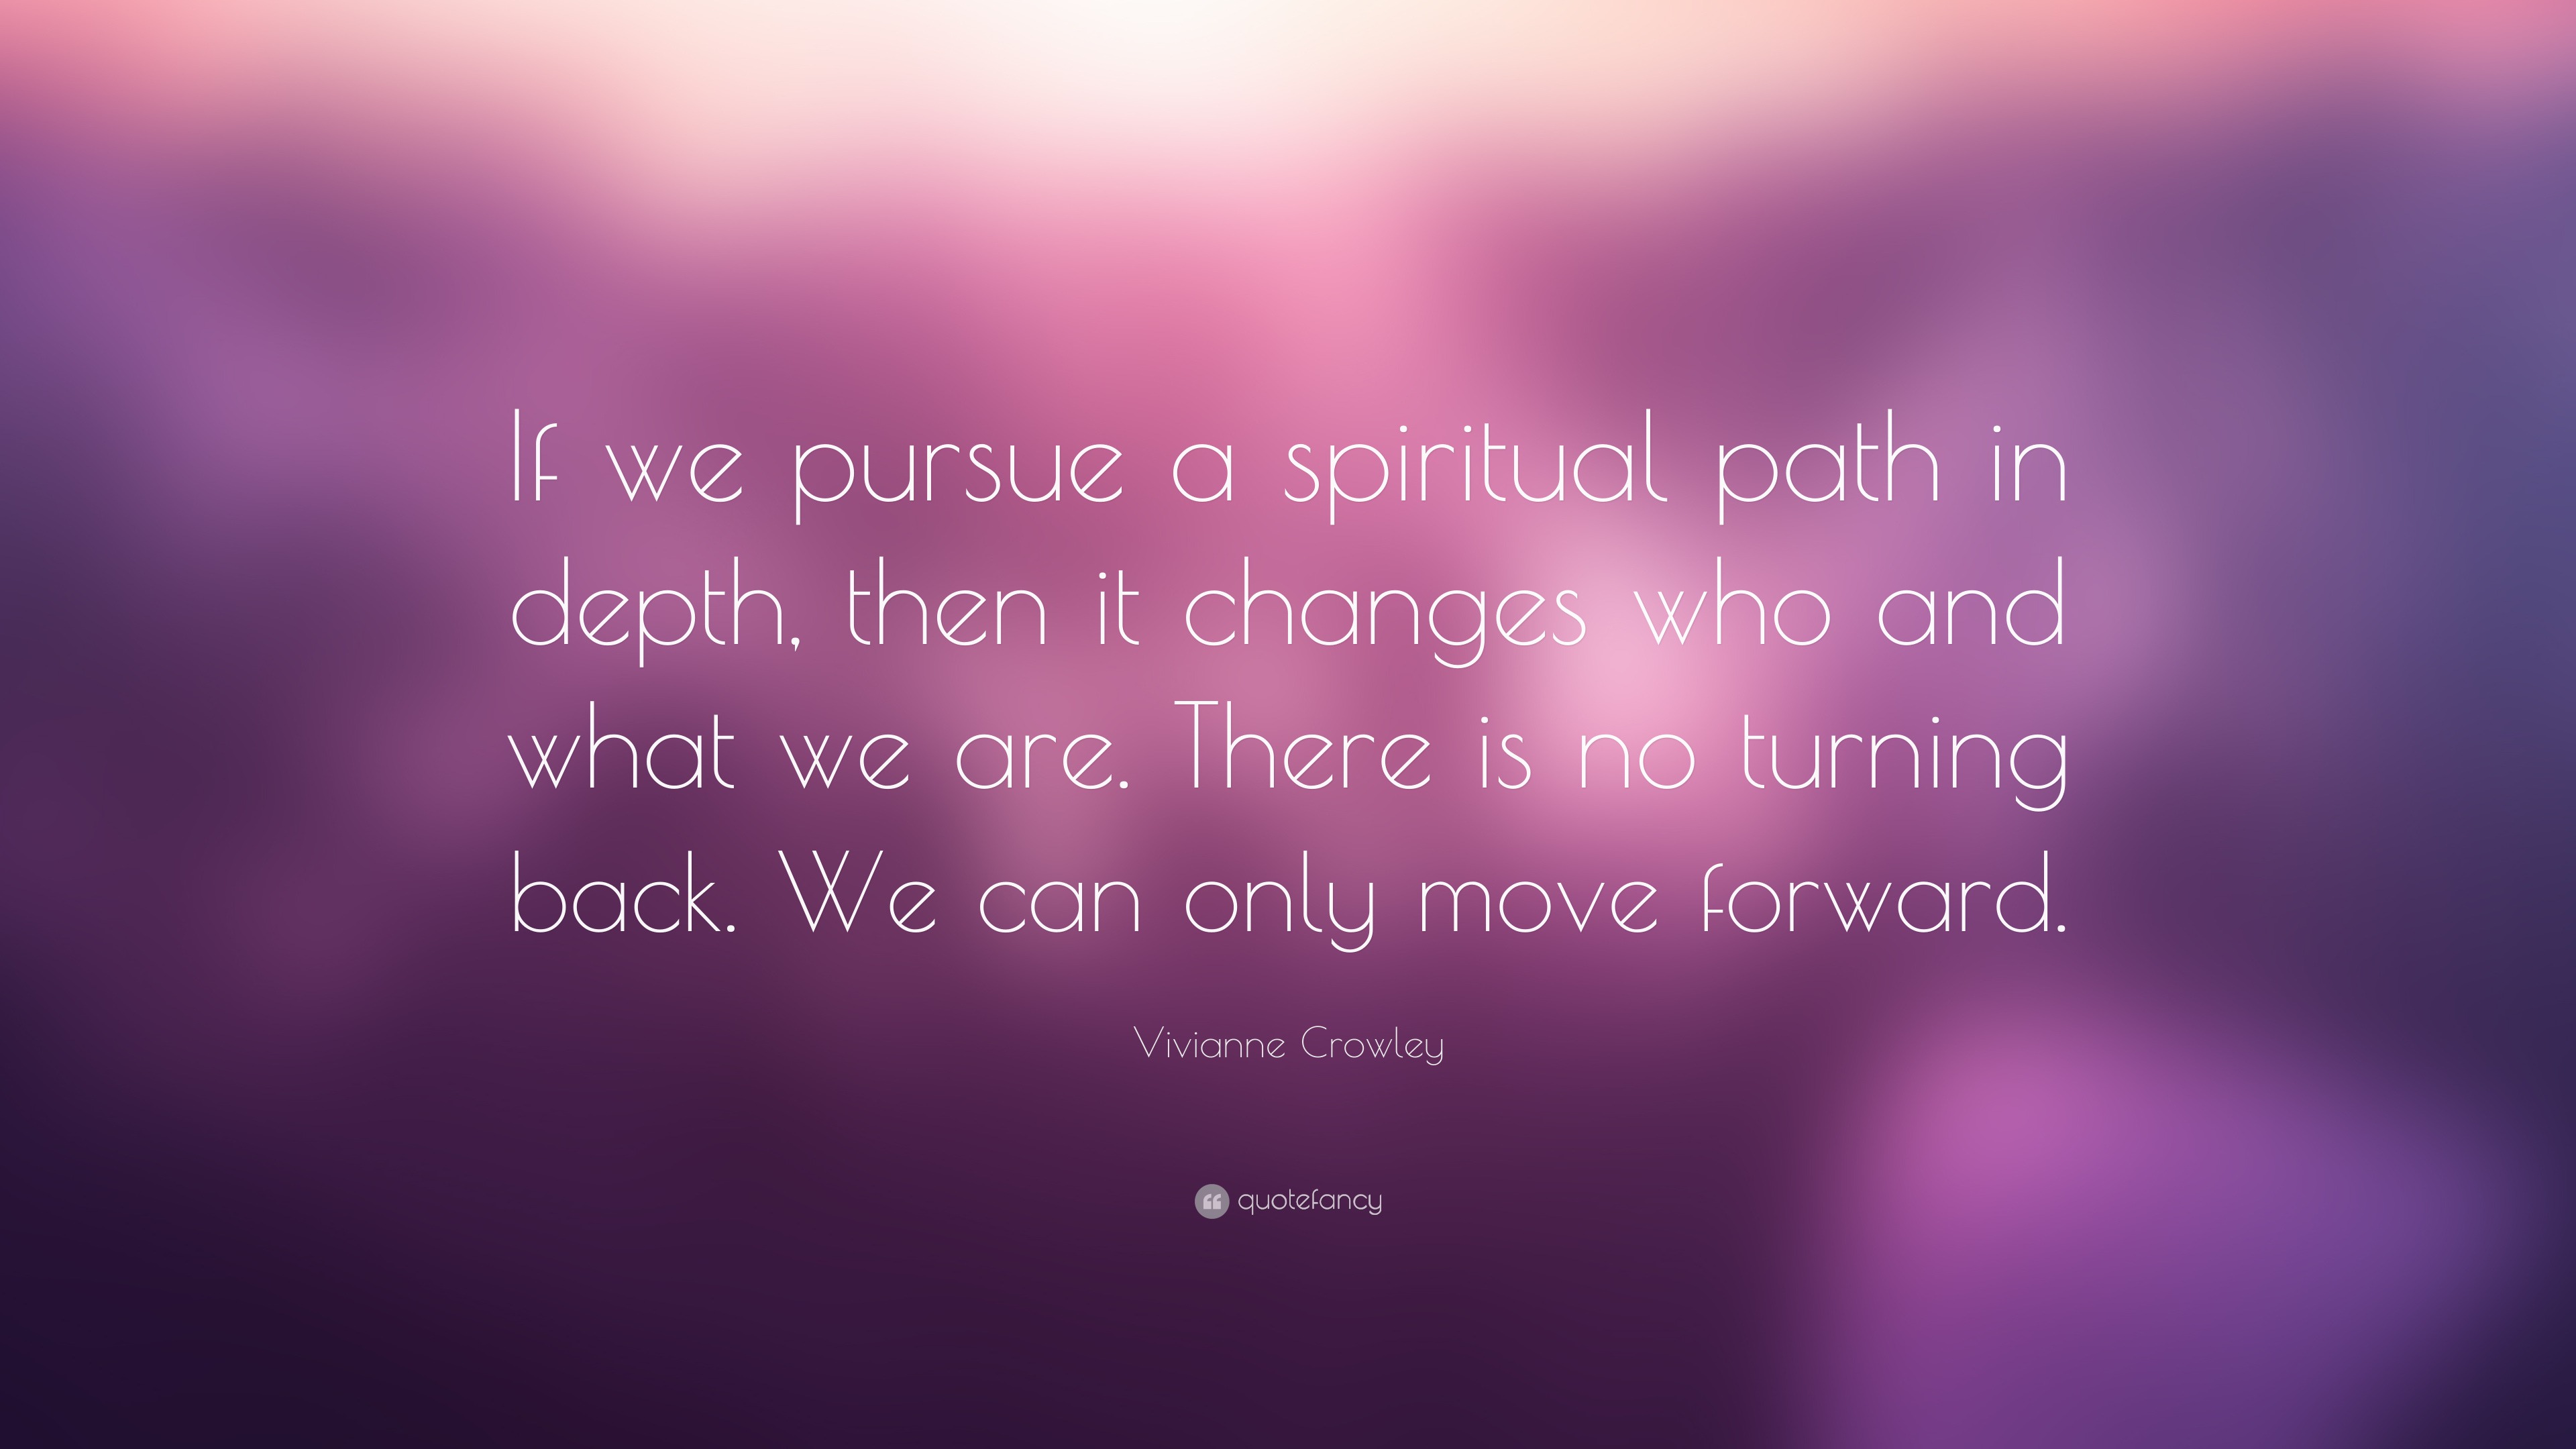 Vivianne Crowley Quote: “If we pursue a spiritual path in depth, then ...